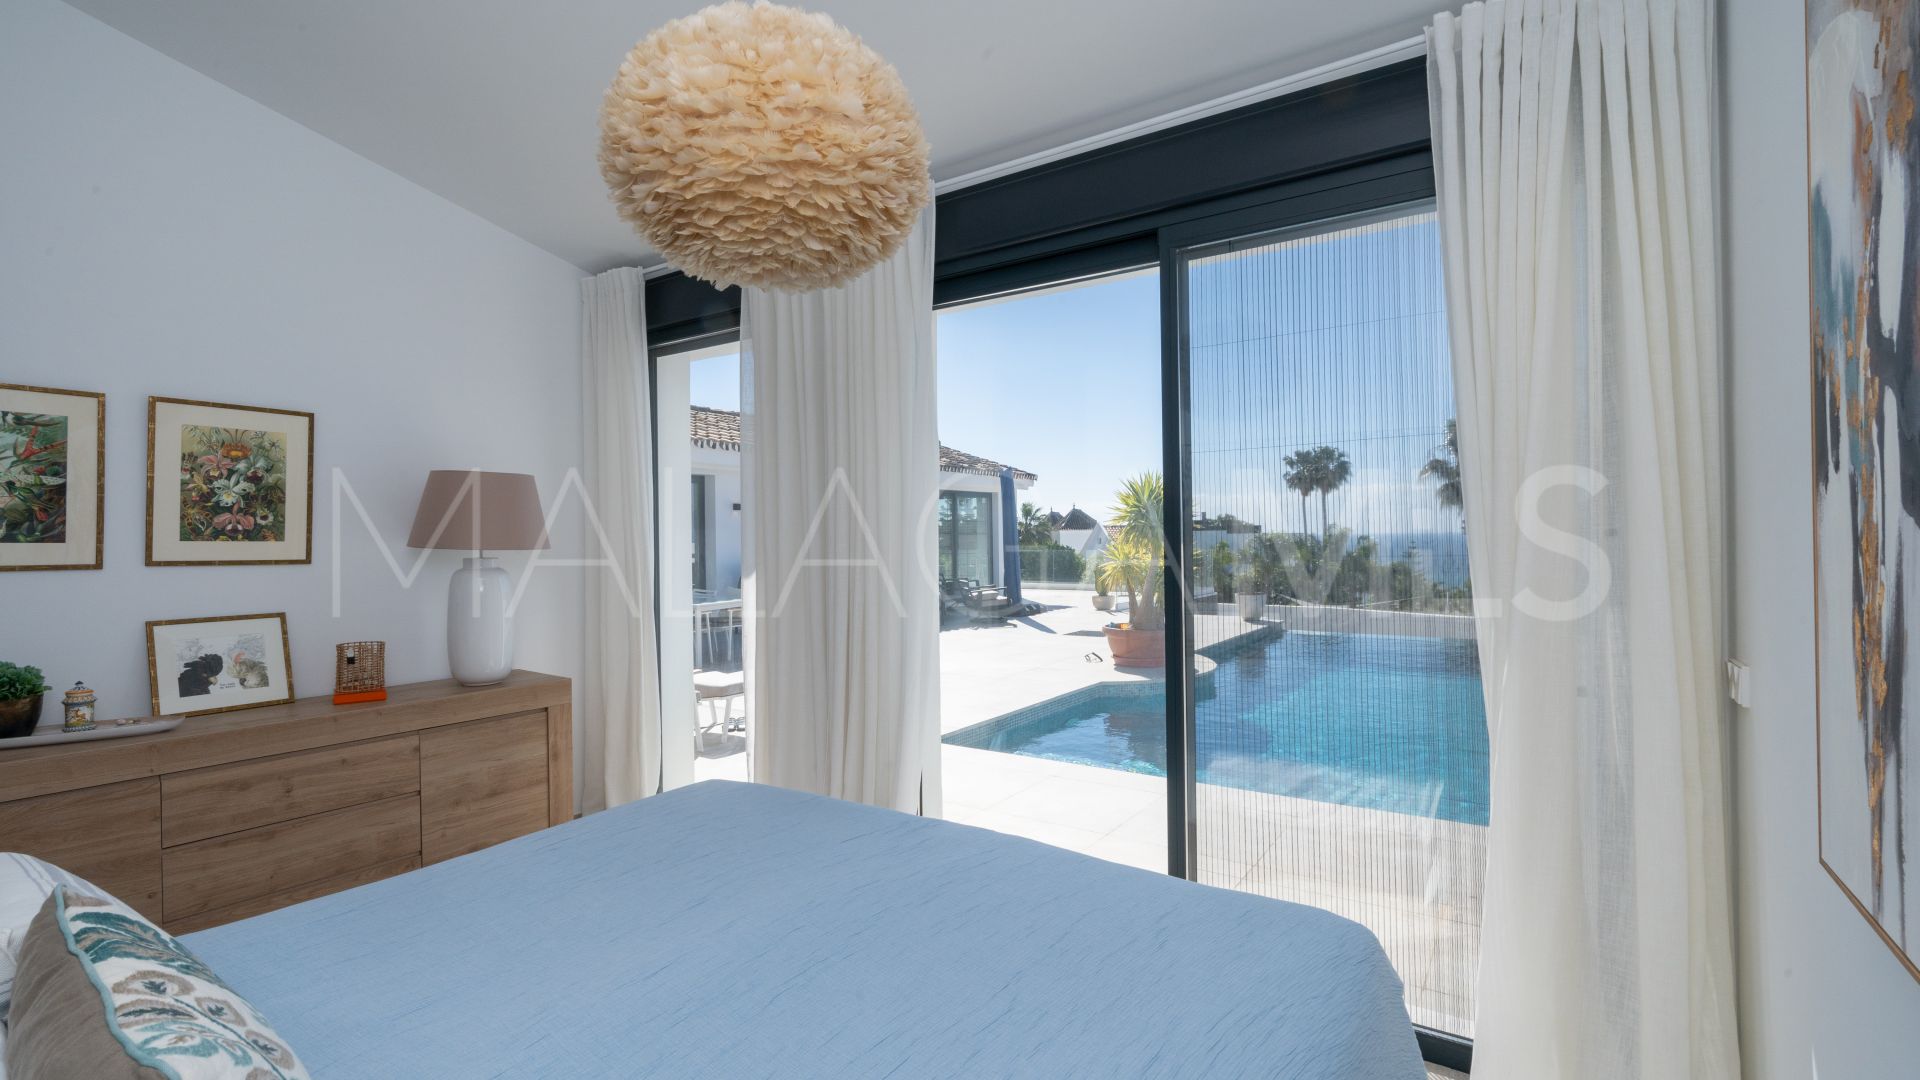 5 bedrooms Seghers villa for sale